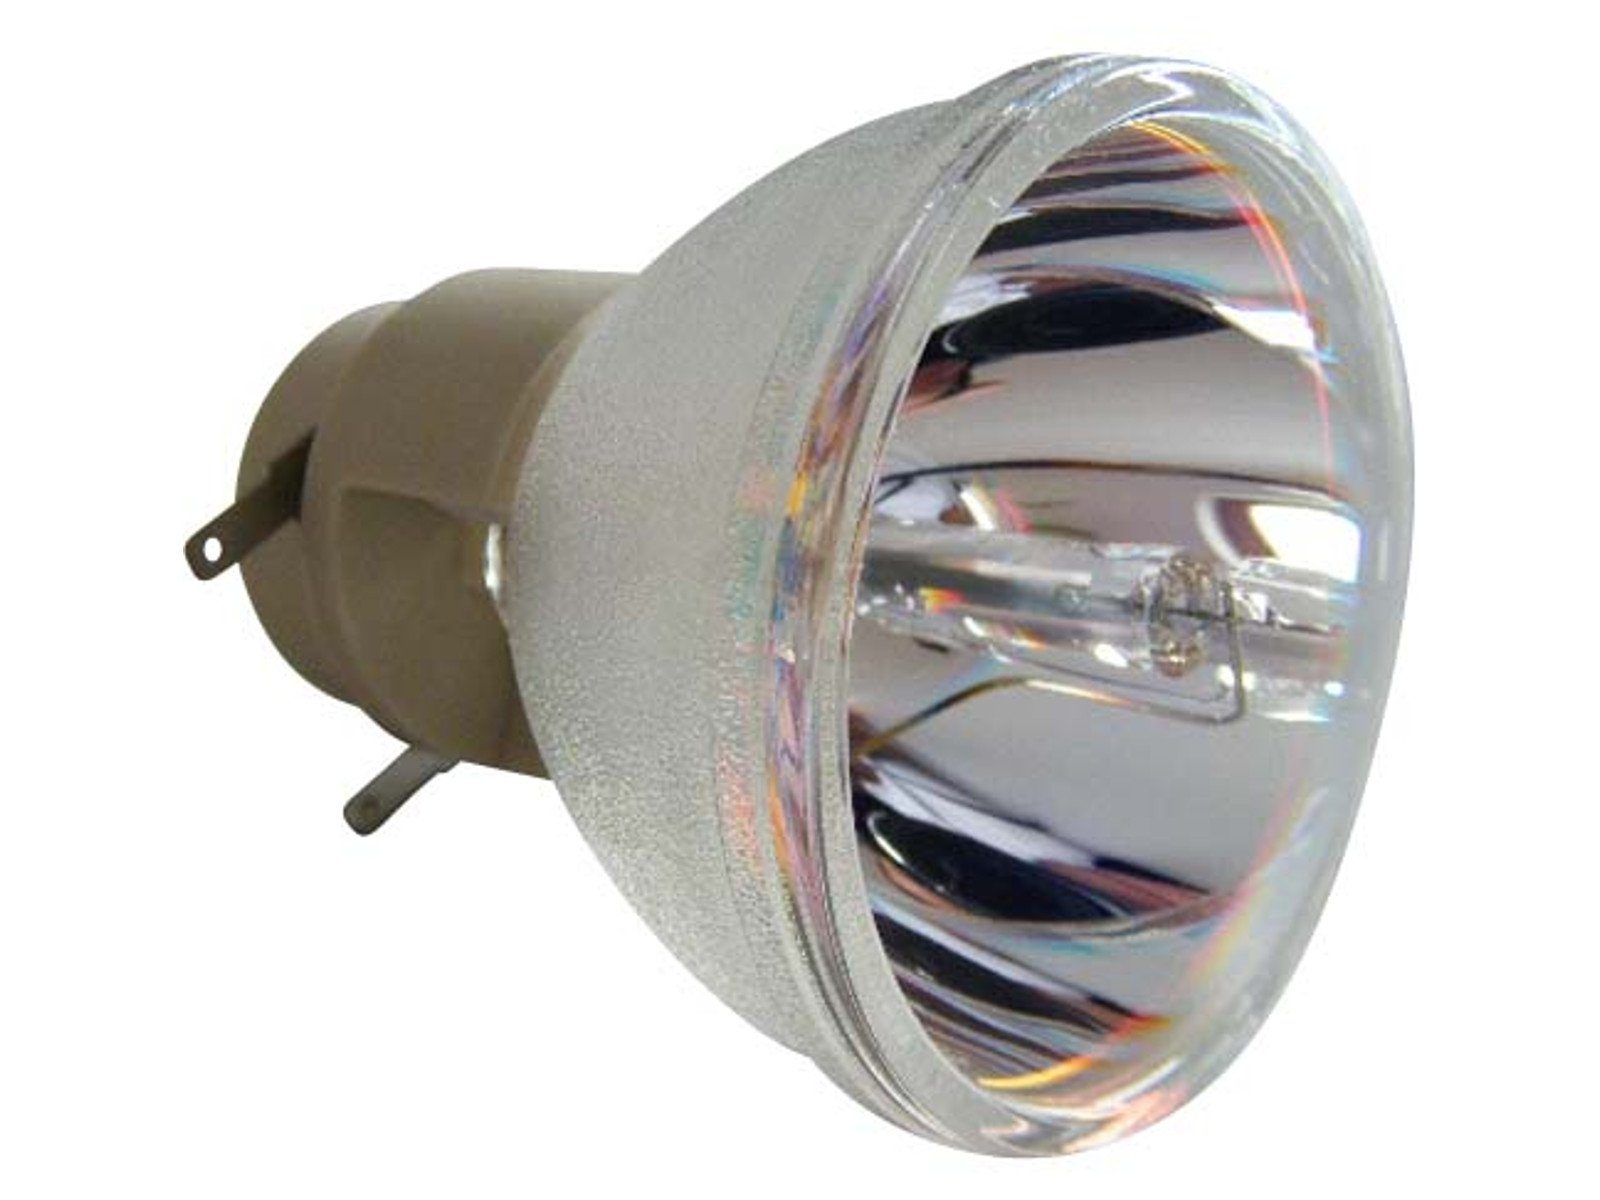 Osram Beamerlampe P-VIP 230/0.8 E20.8, 230 W, 1-St., Ersatzlampe P-VIP 230/0.8 E20.8, Beamerlampe für diverse Projektoren